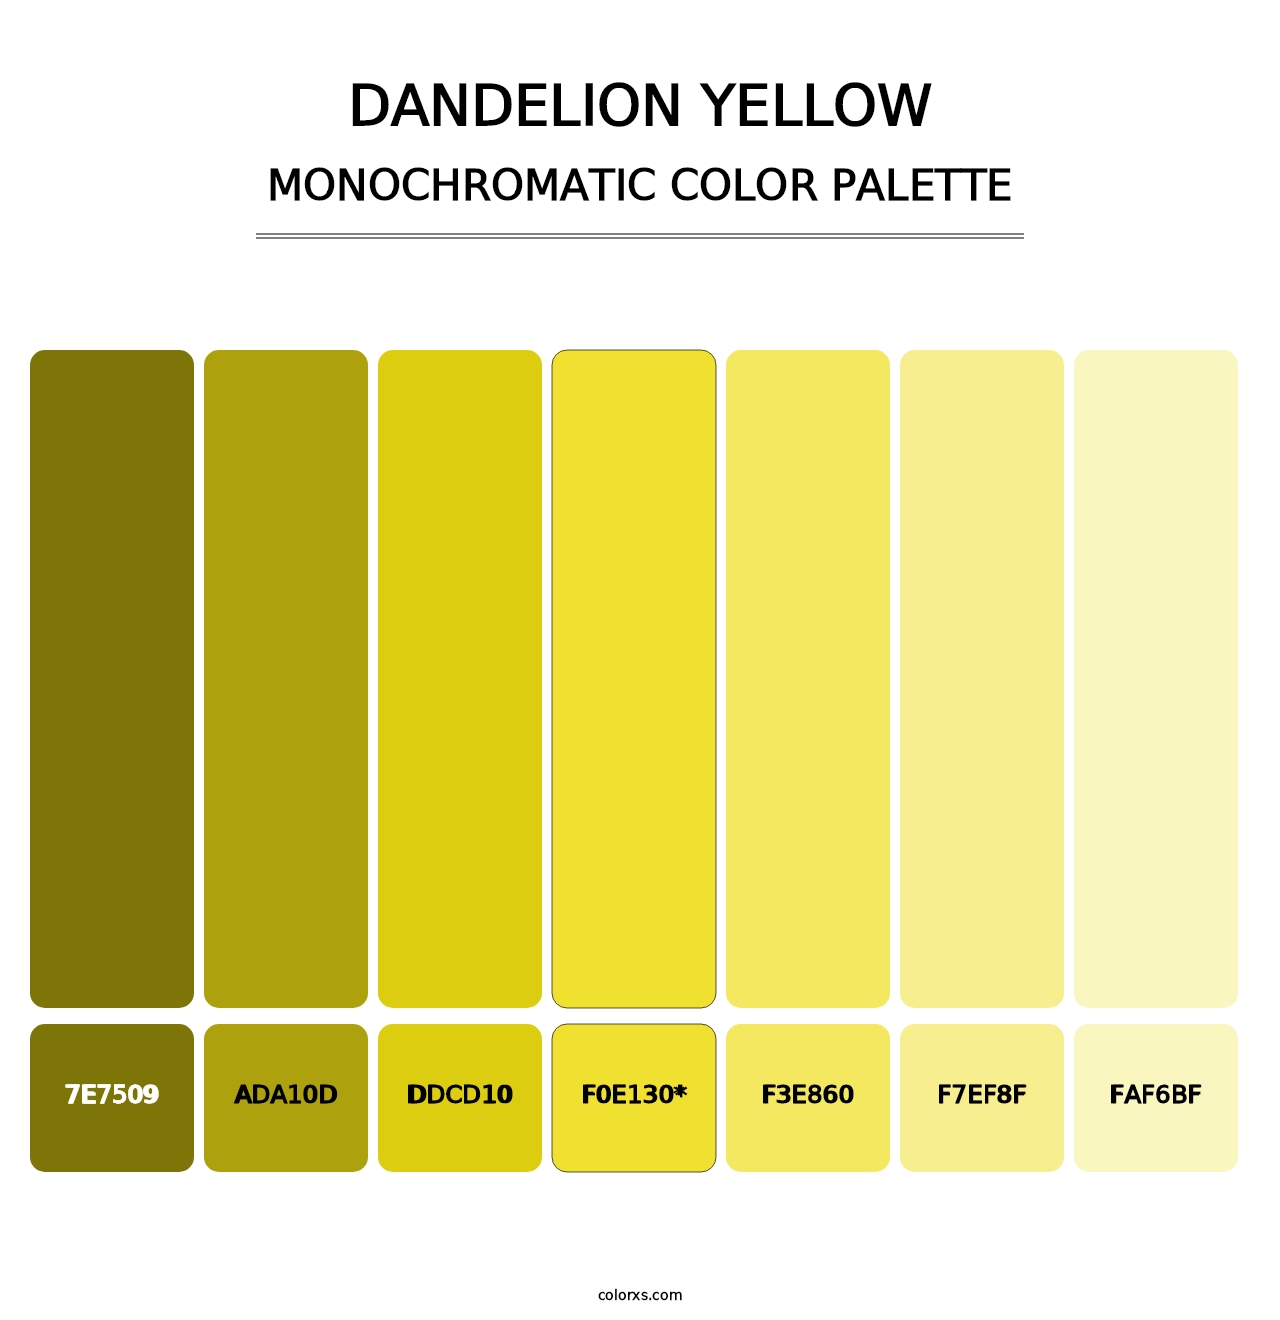 Dandelion Yellow - Monochromatic Color Palette